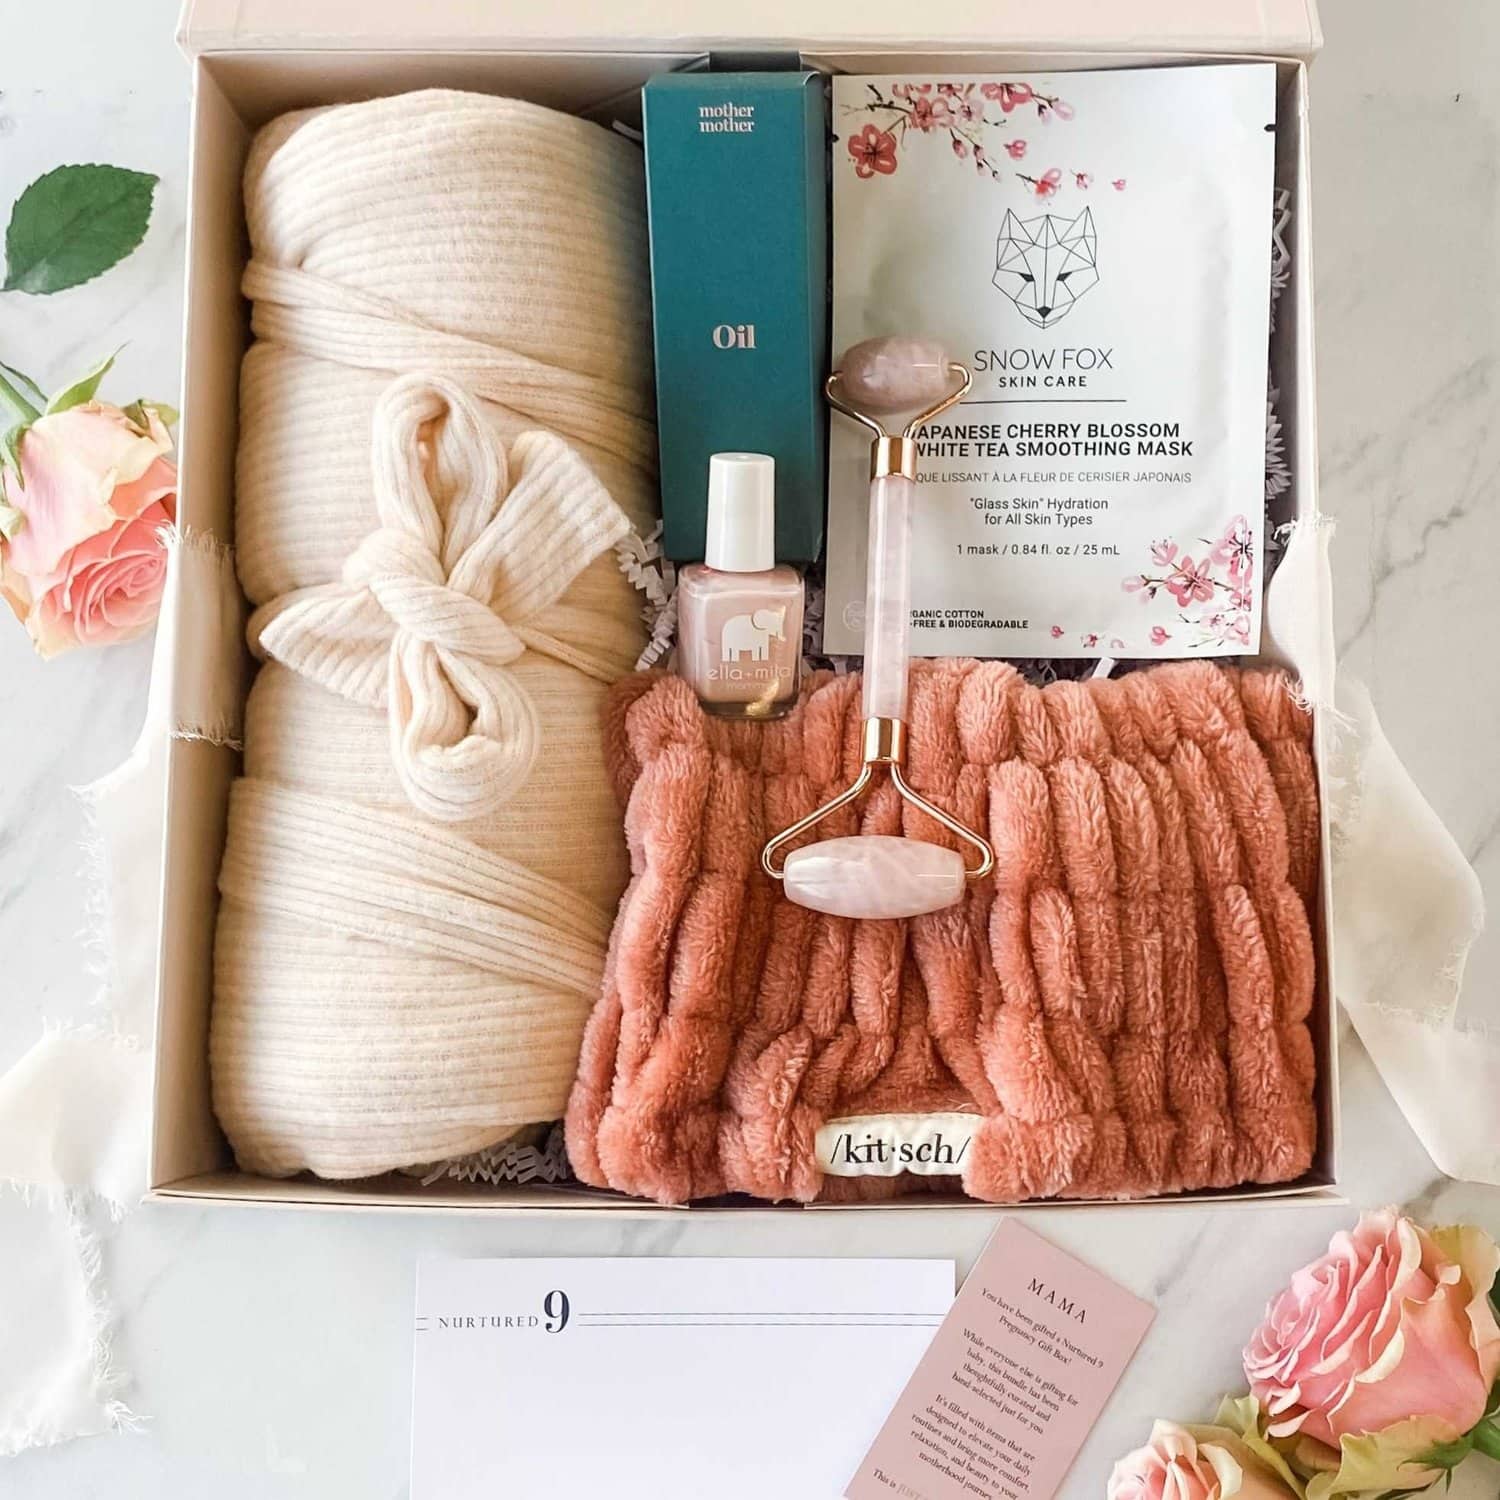 The Spa Day Pregnancy Gift Box from Nurtured 9